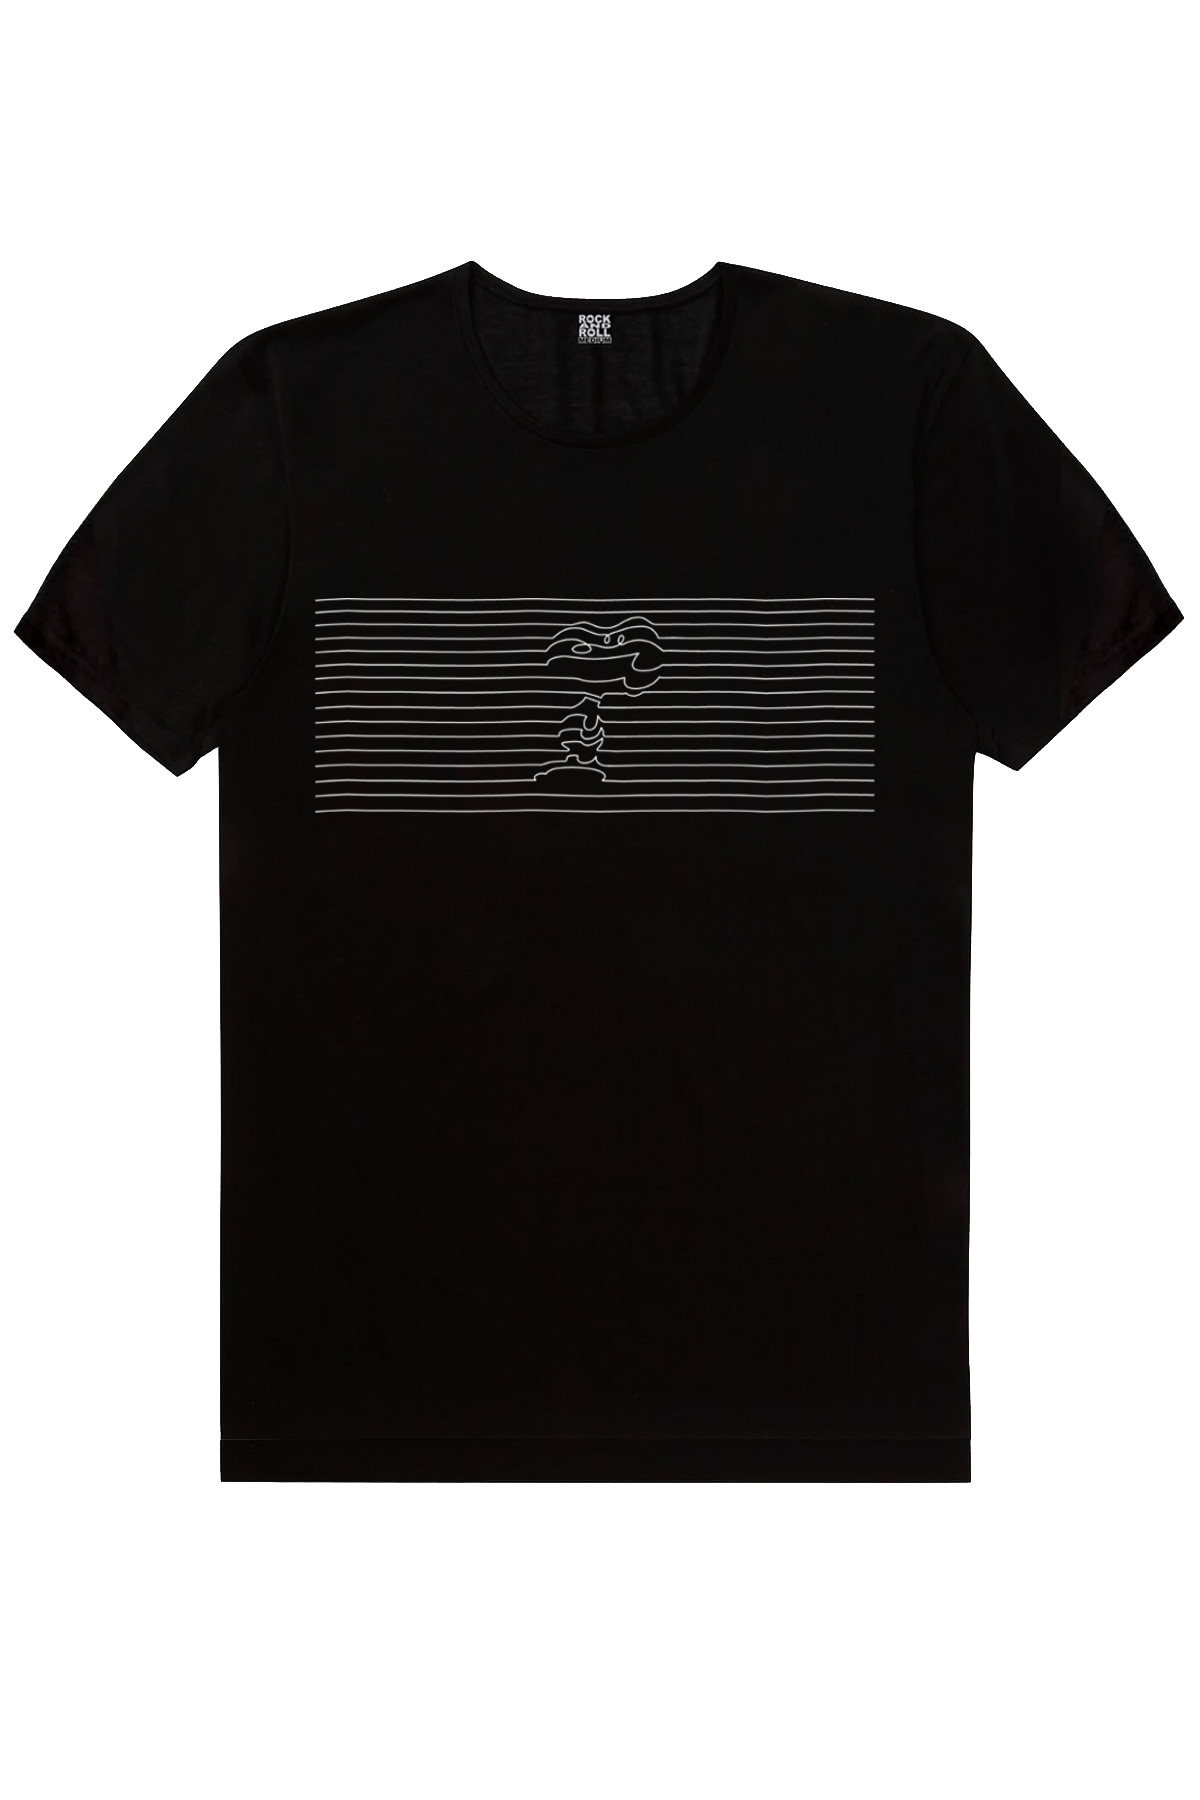 Çizgili Köpek Siyah Kısa Kollu Erkek T-shirt